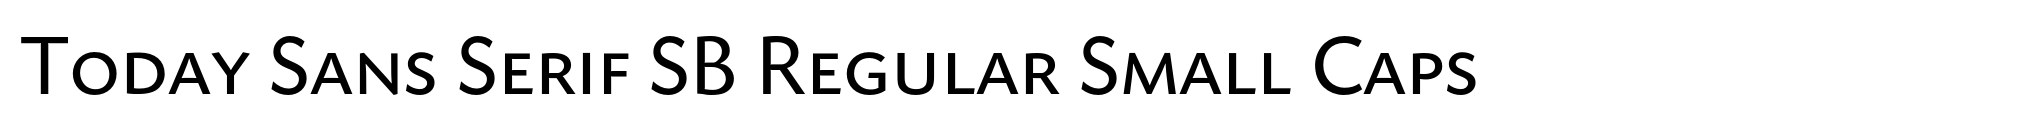 Today Sans Serif SB Regular Small Caps image